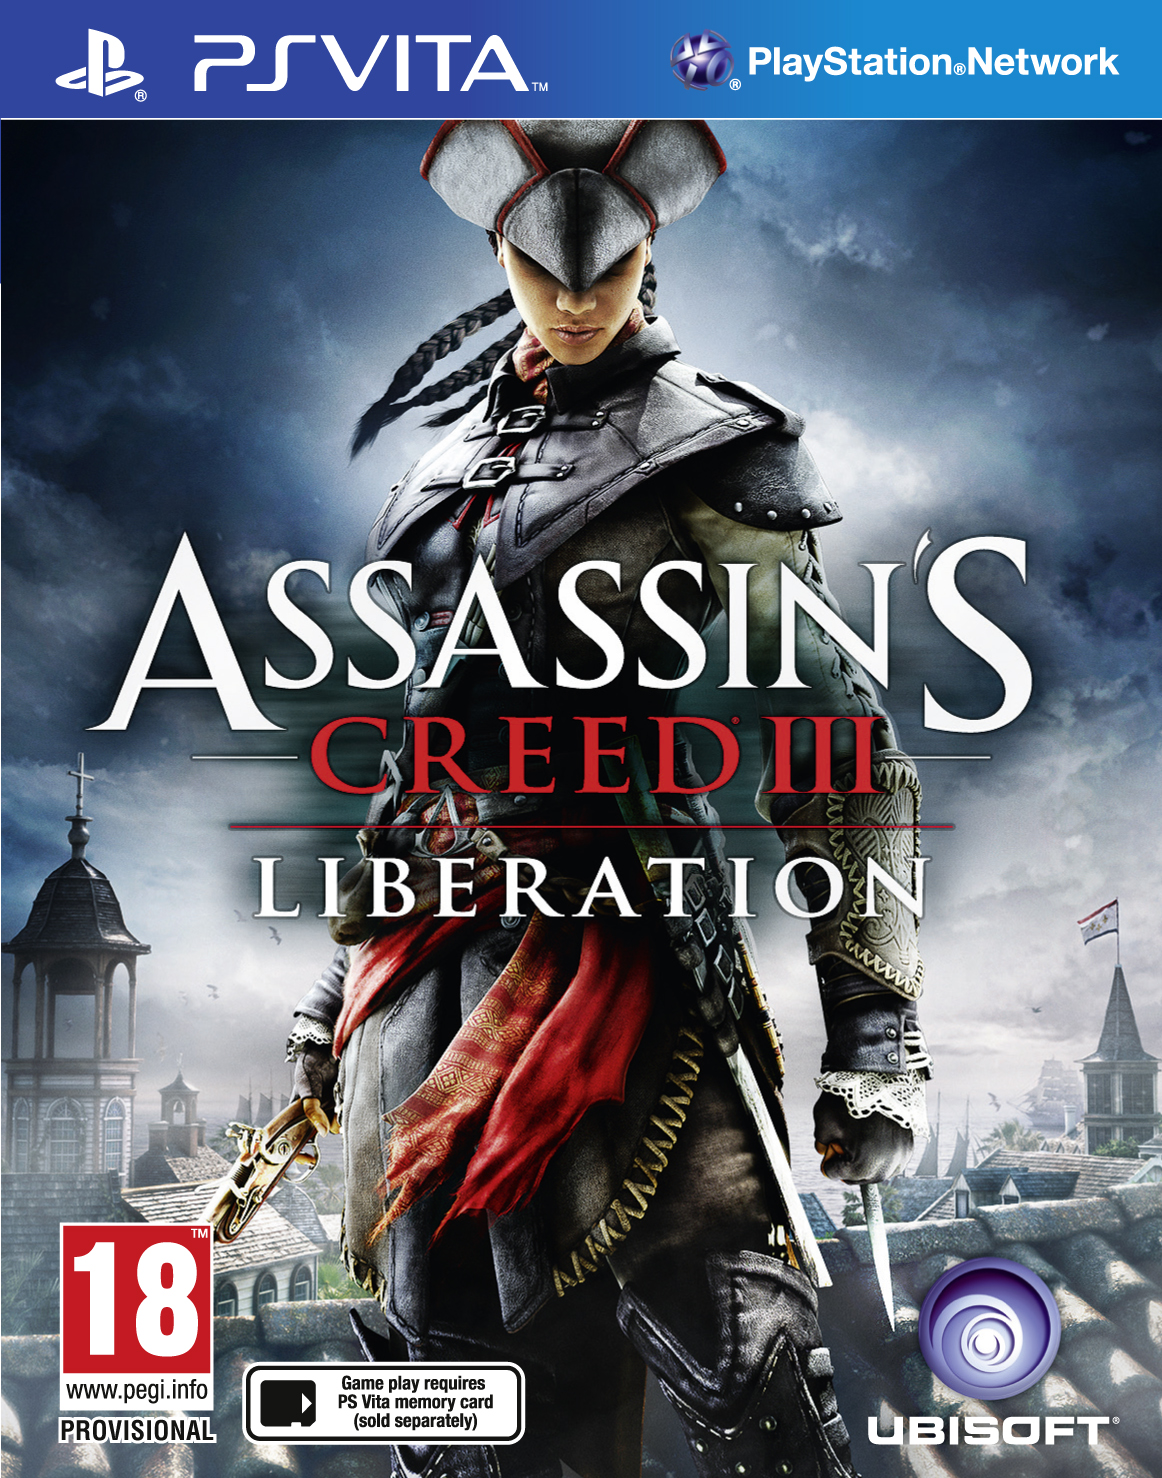 Assassins-Creed-III-Liberation-Packshot-